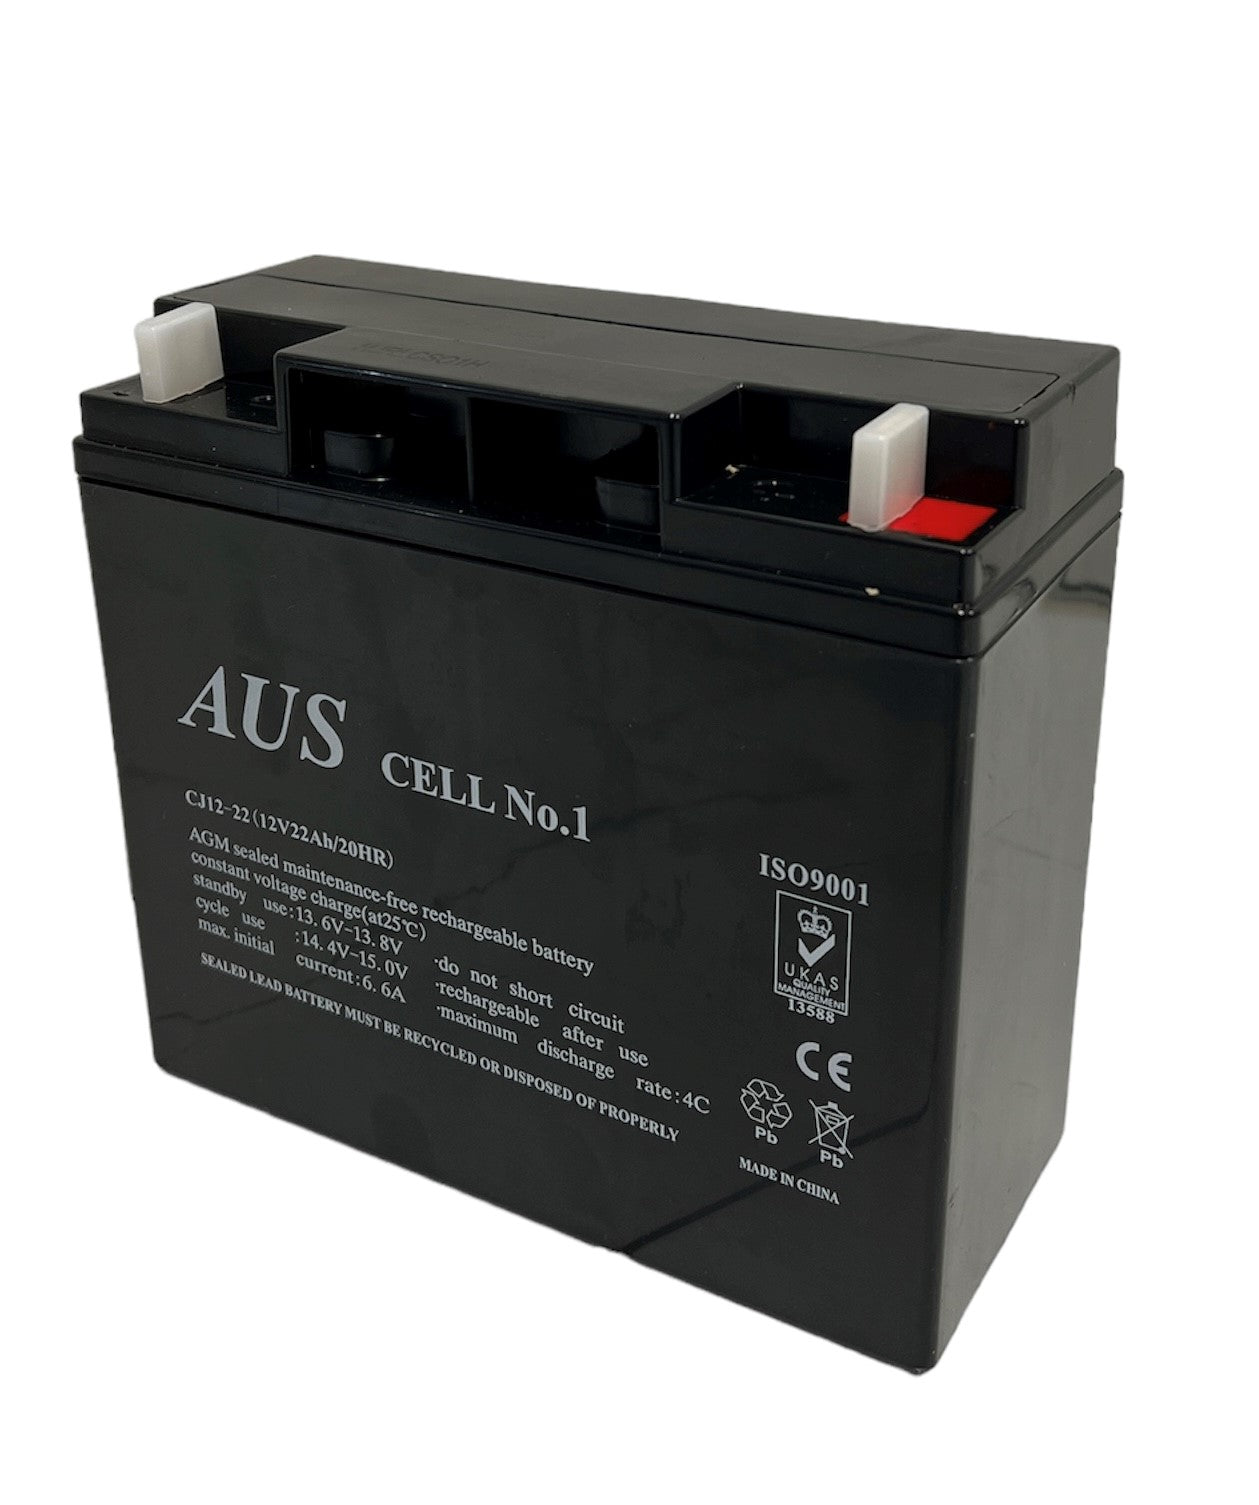 Aus Cell No.1 12V22Ah Sealed Lead Acid Battery | CJ12-22